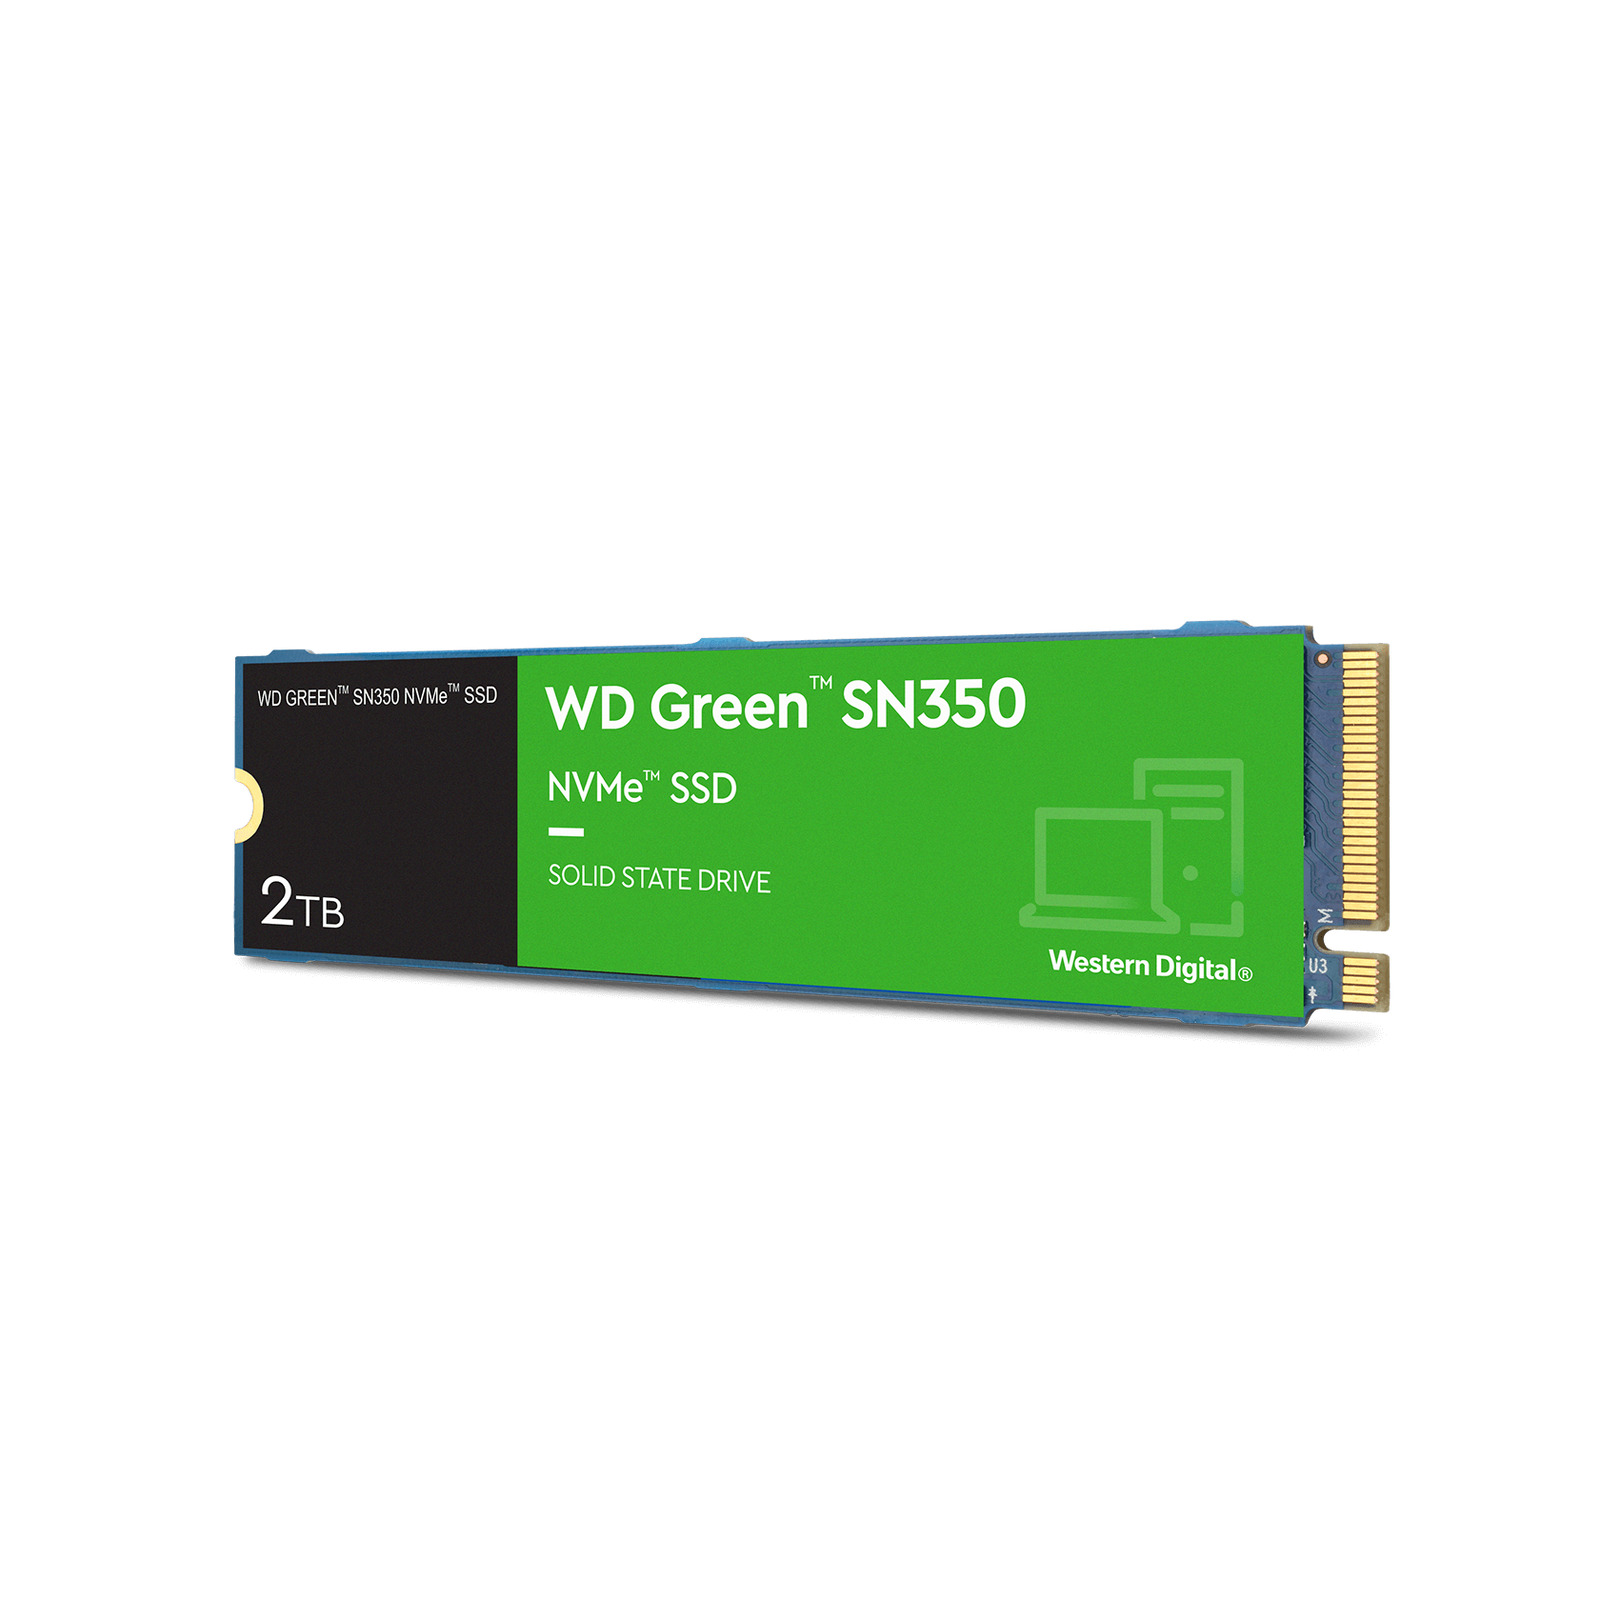 Western Digital 2TB WD Green SN350 NVMe Internal SSD, QLC M.2 2280 - WDS200T3G0C